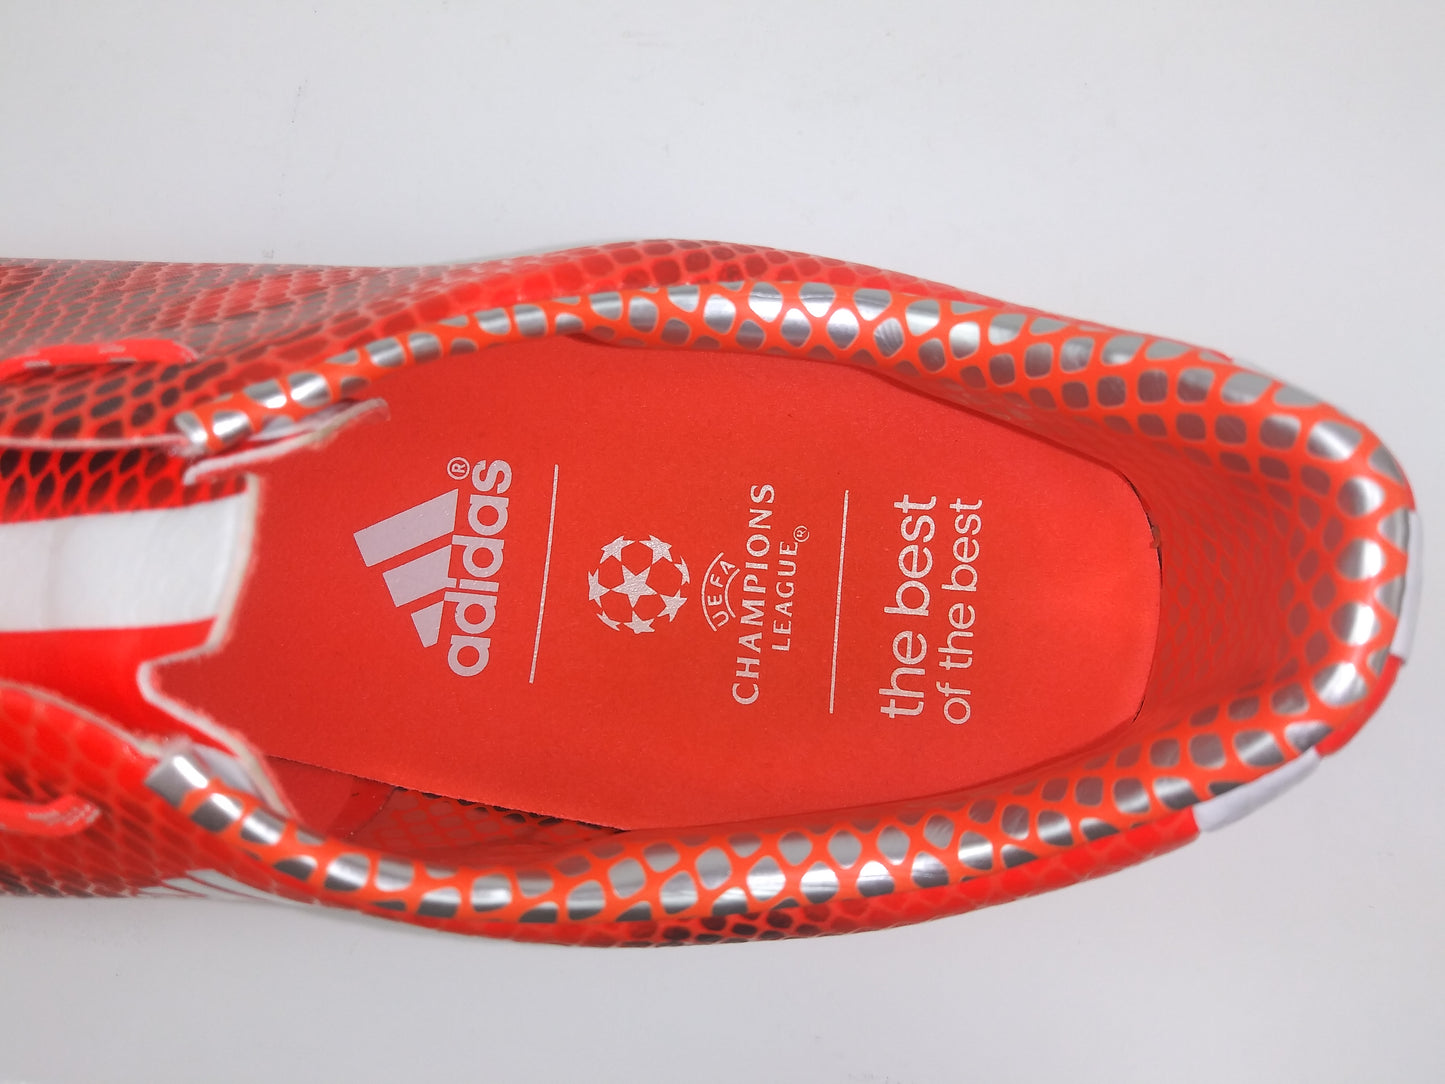 Adidas F50 adizero FG Orange Red